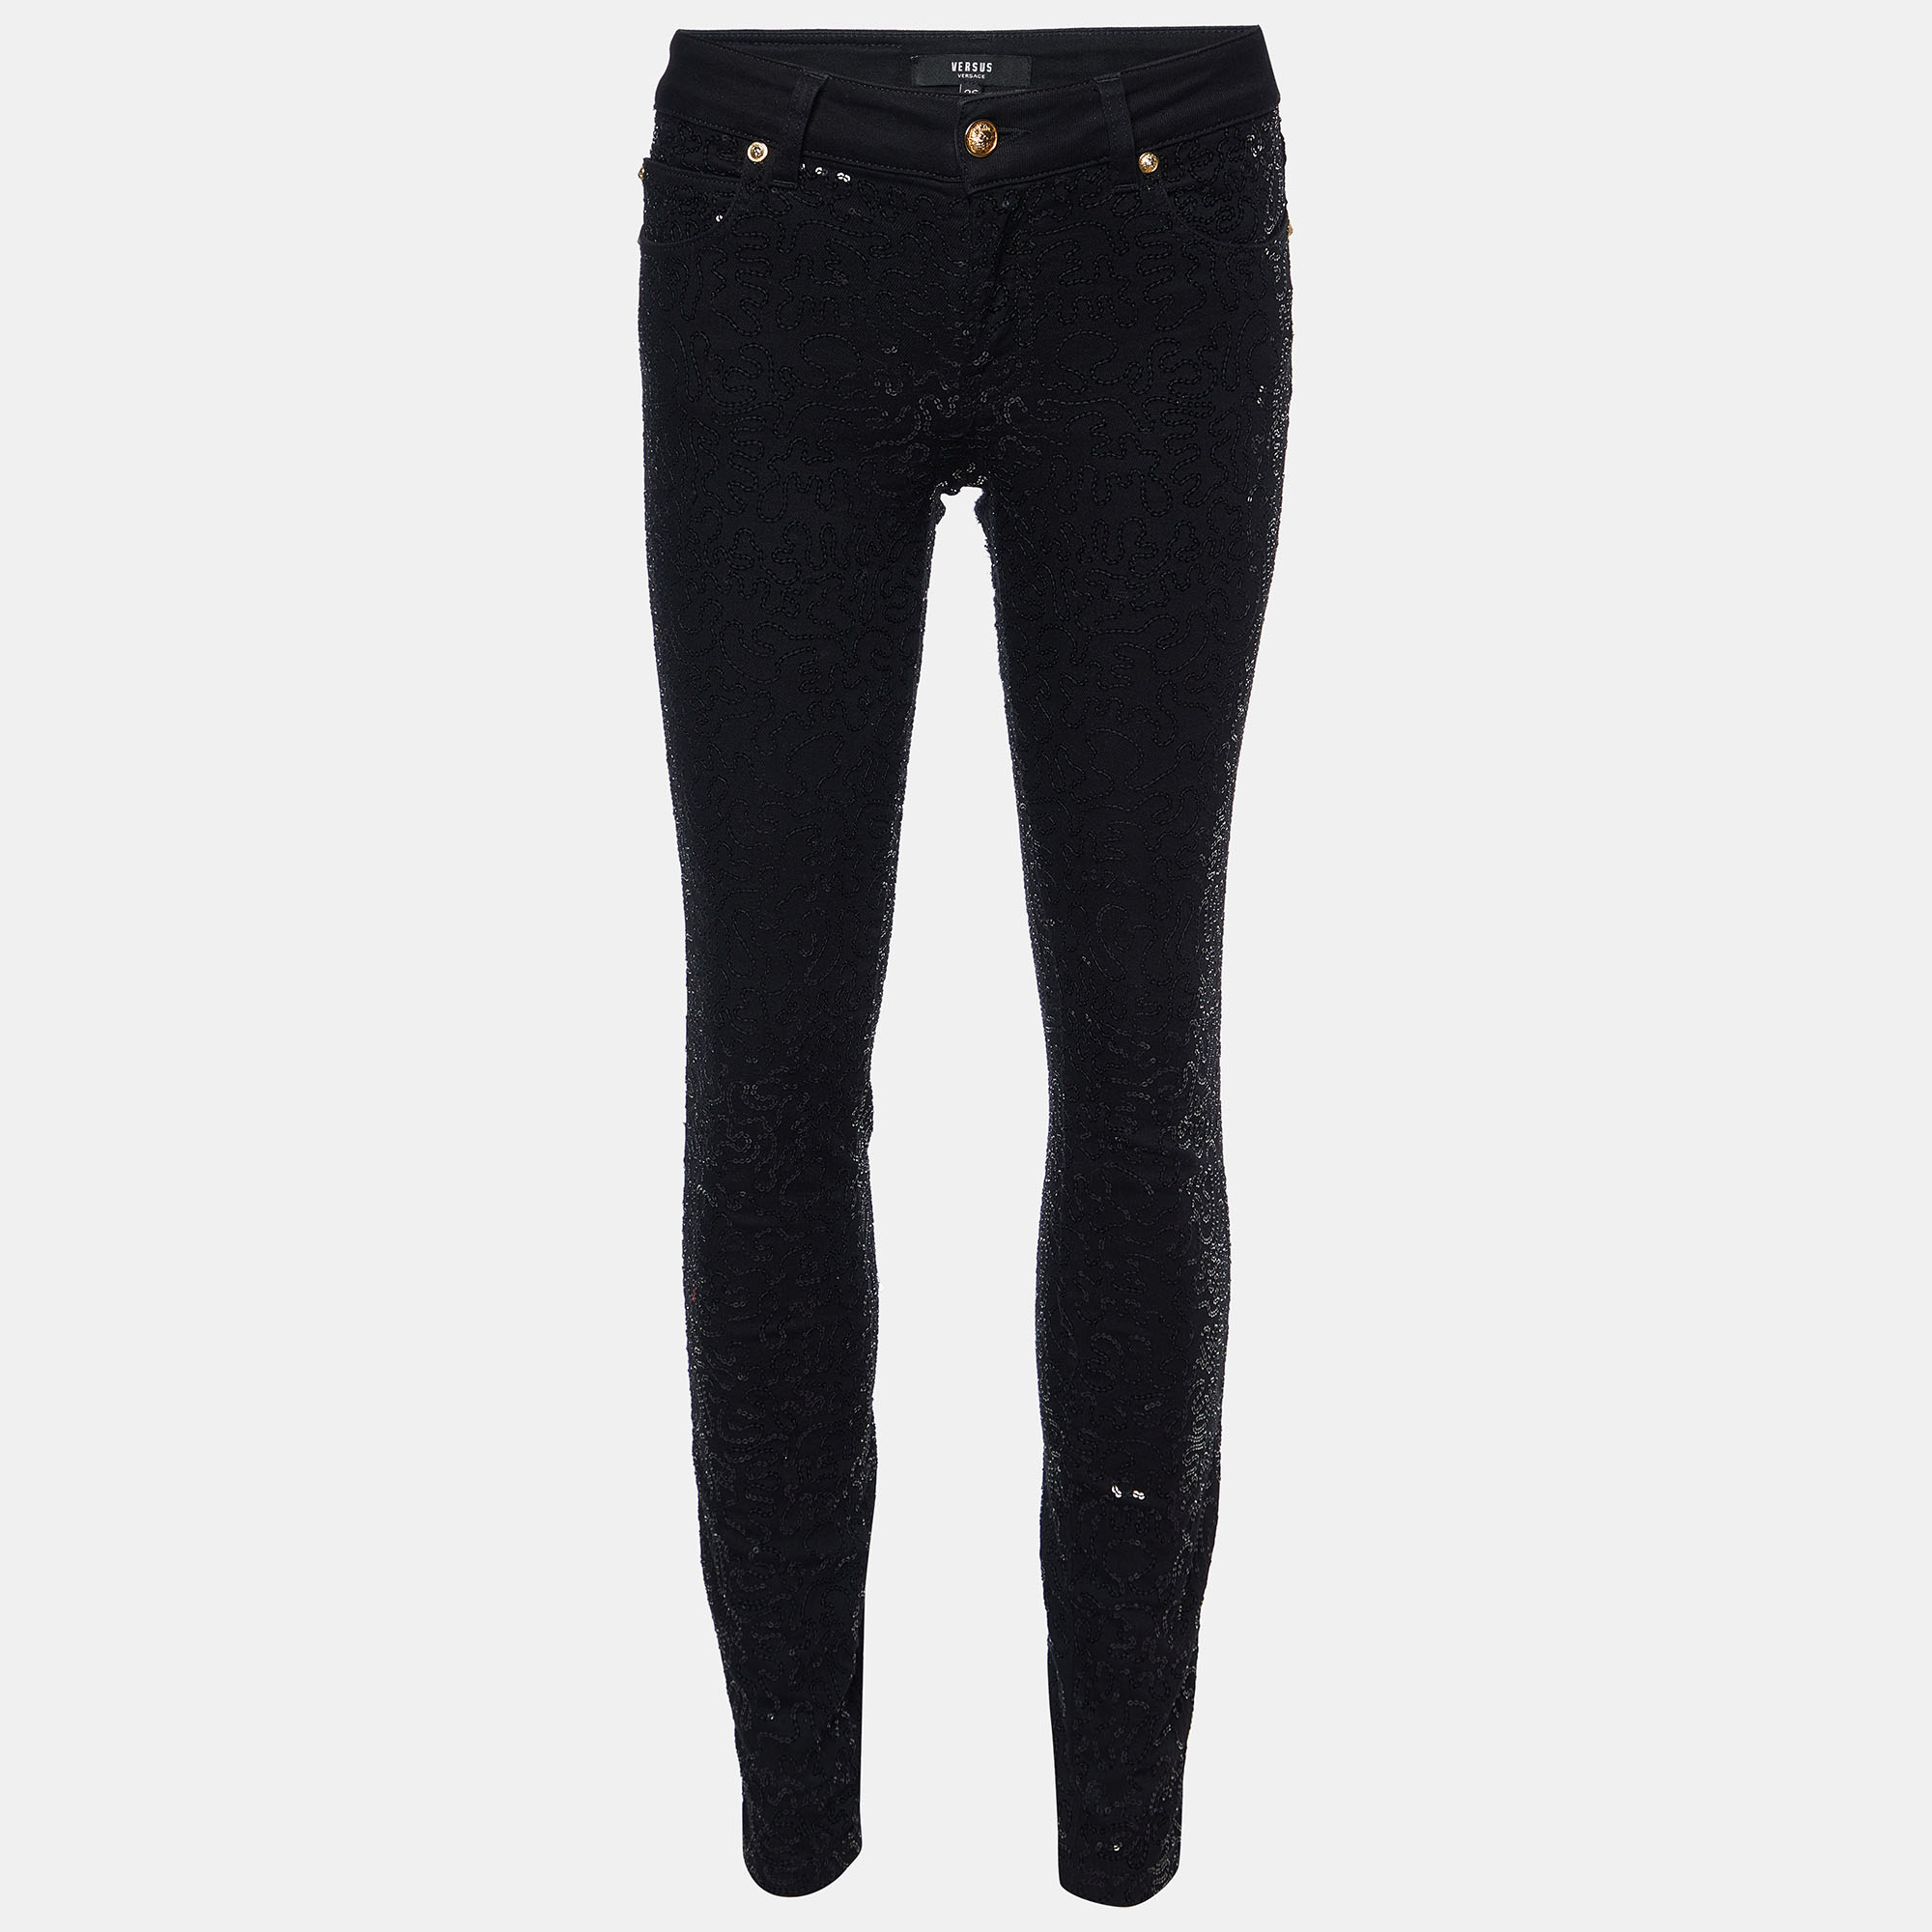 

Versus Versace Black Sequined Denim Skinny Jeans /Waist 28